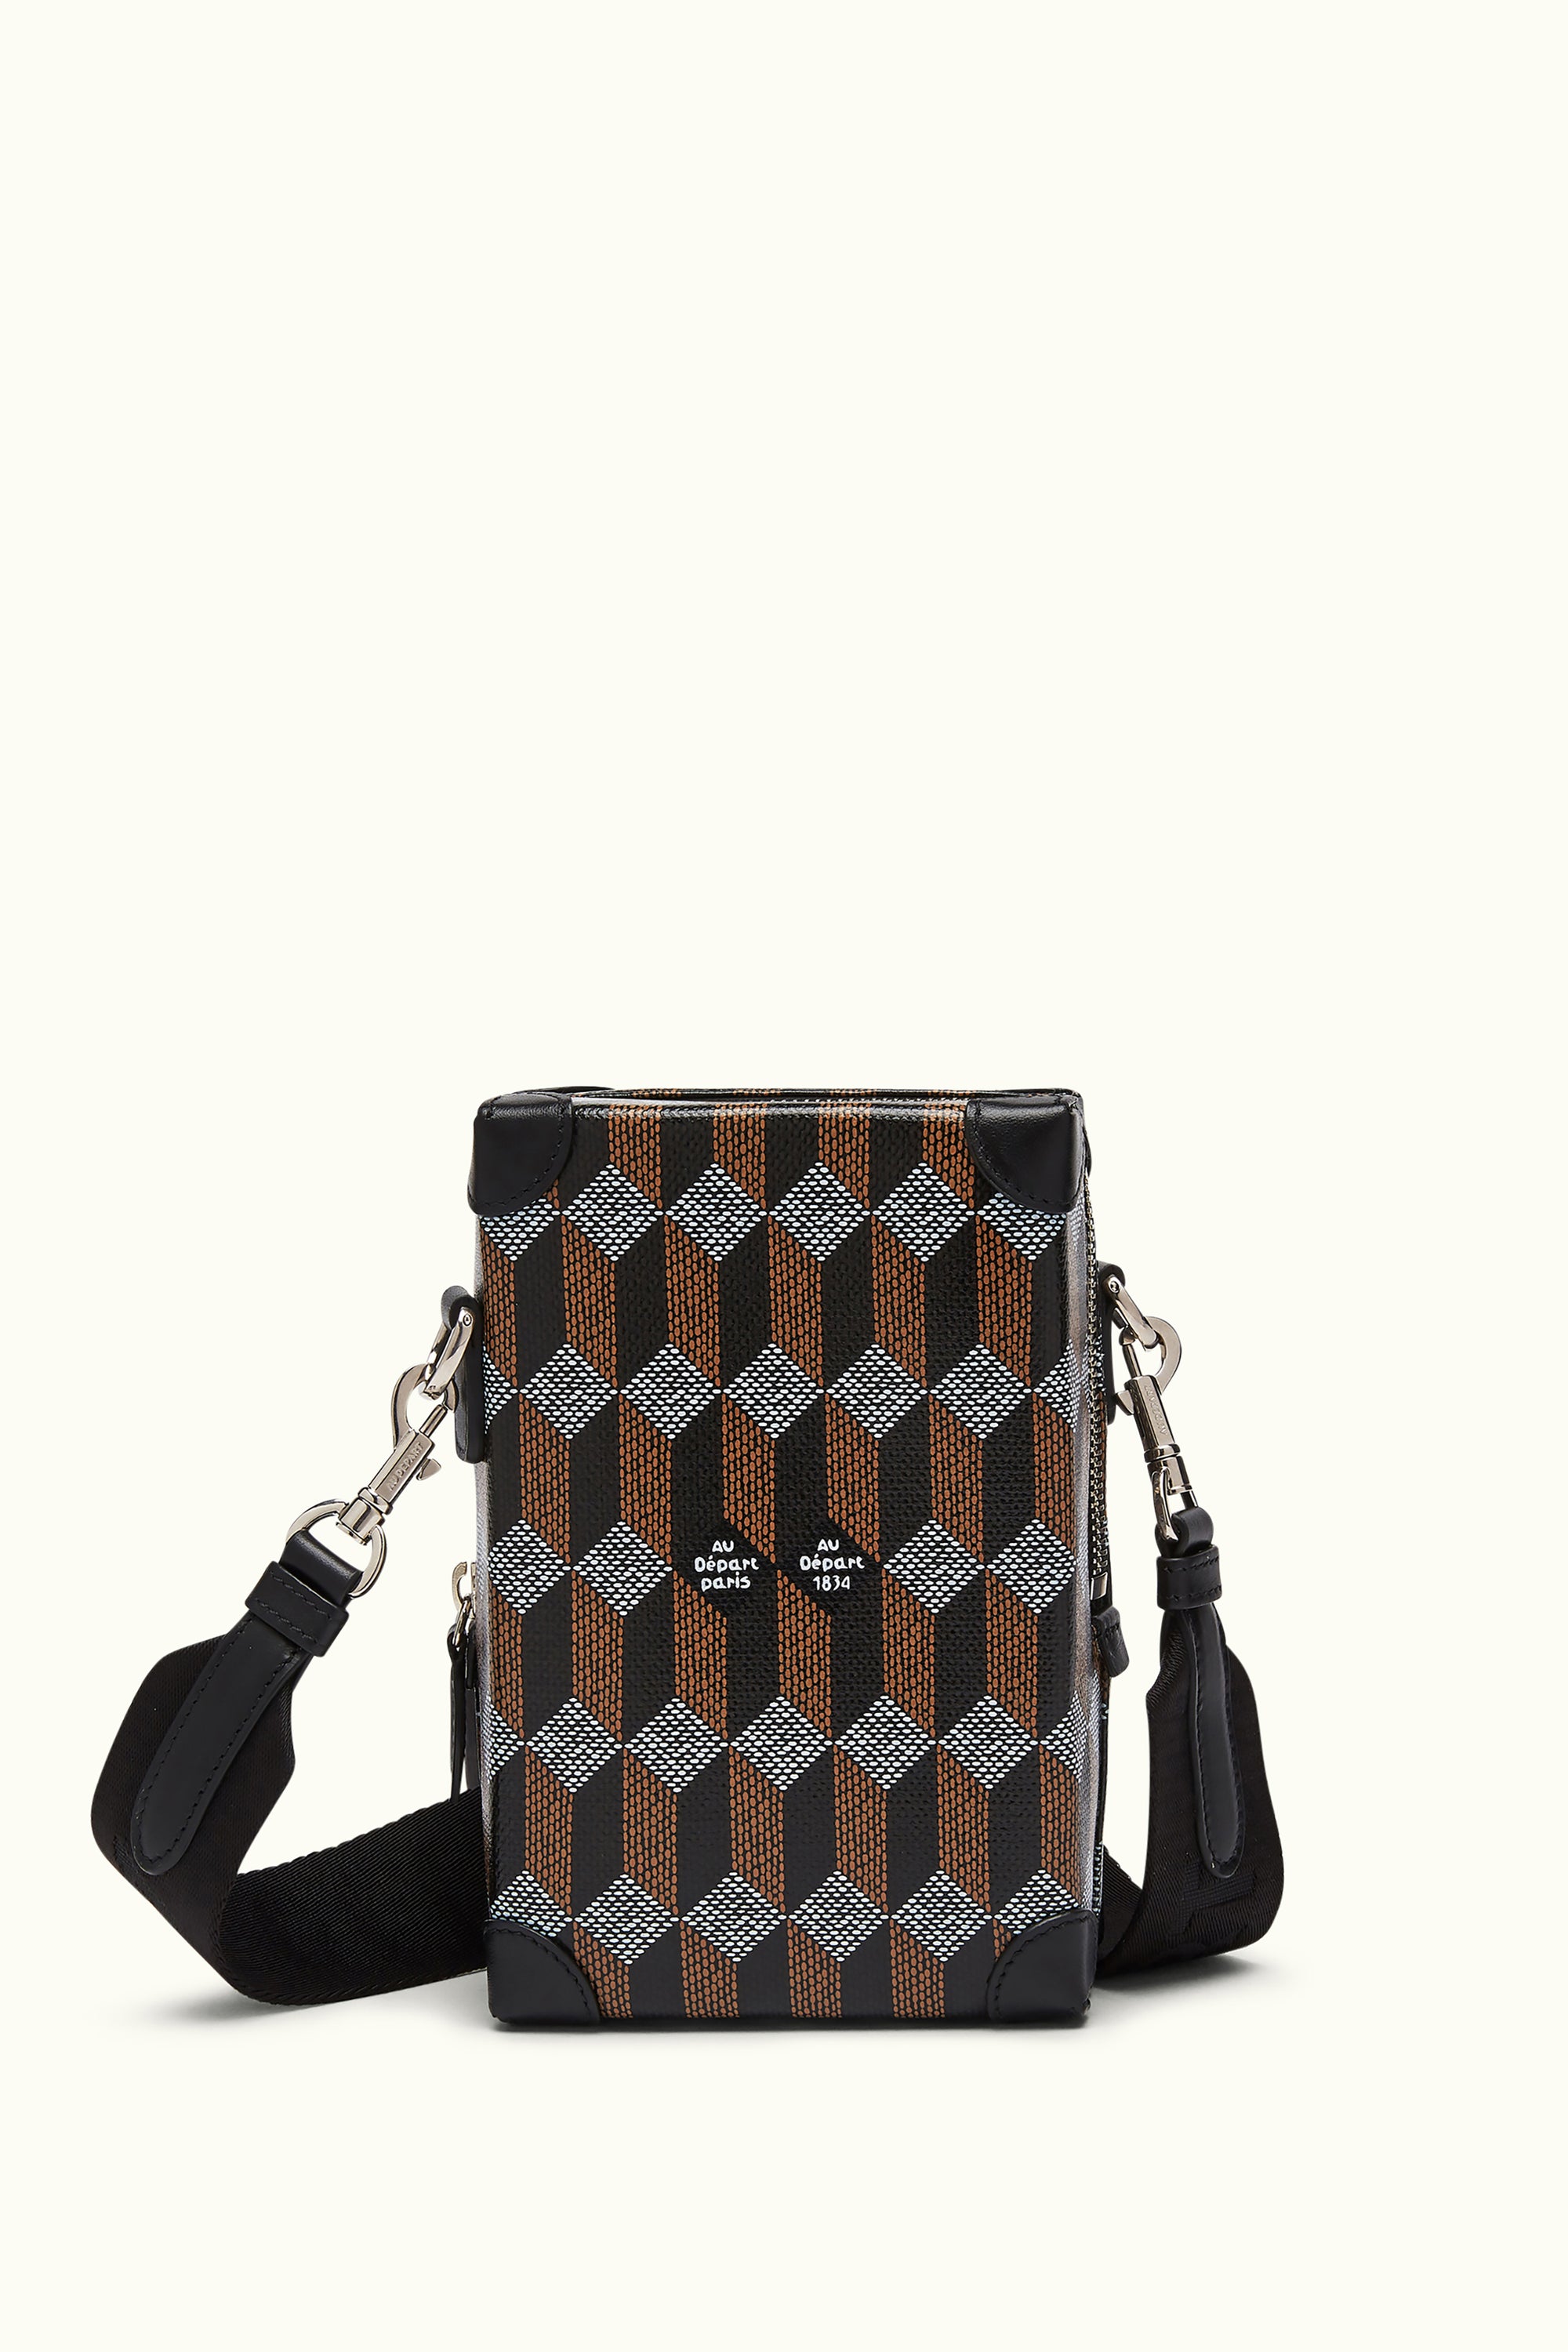 Louis Vuitton Soft Trunk Bag Monogram Tuffetage Canvas Mini Brown